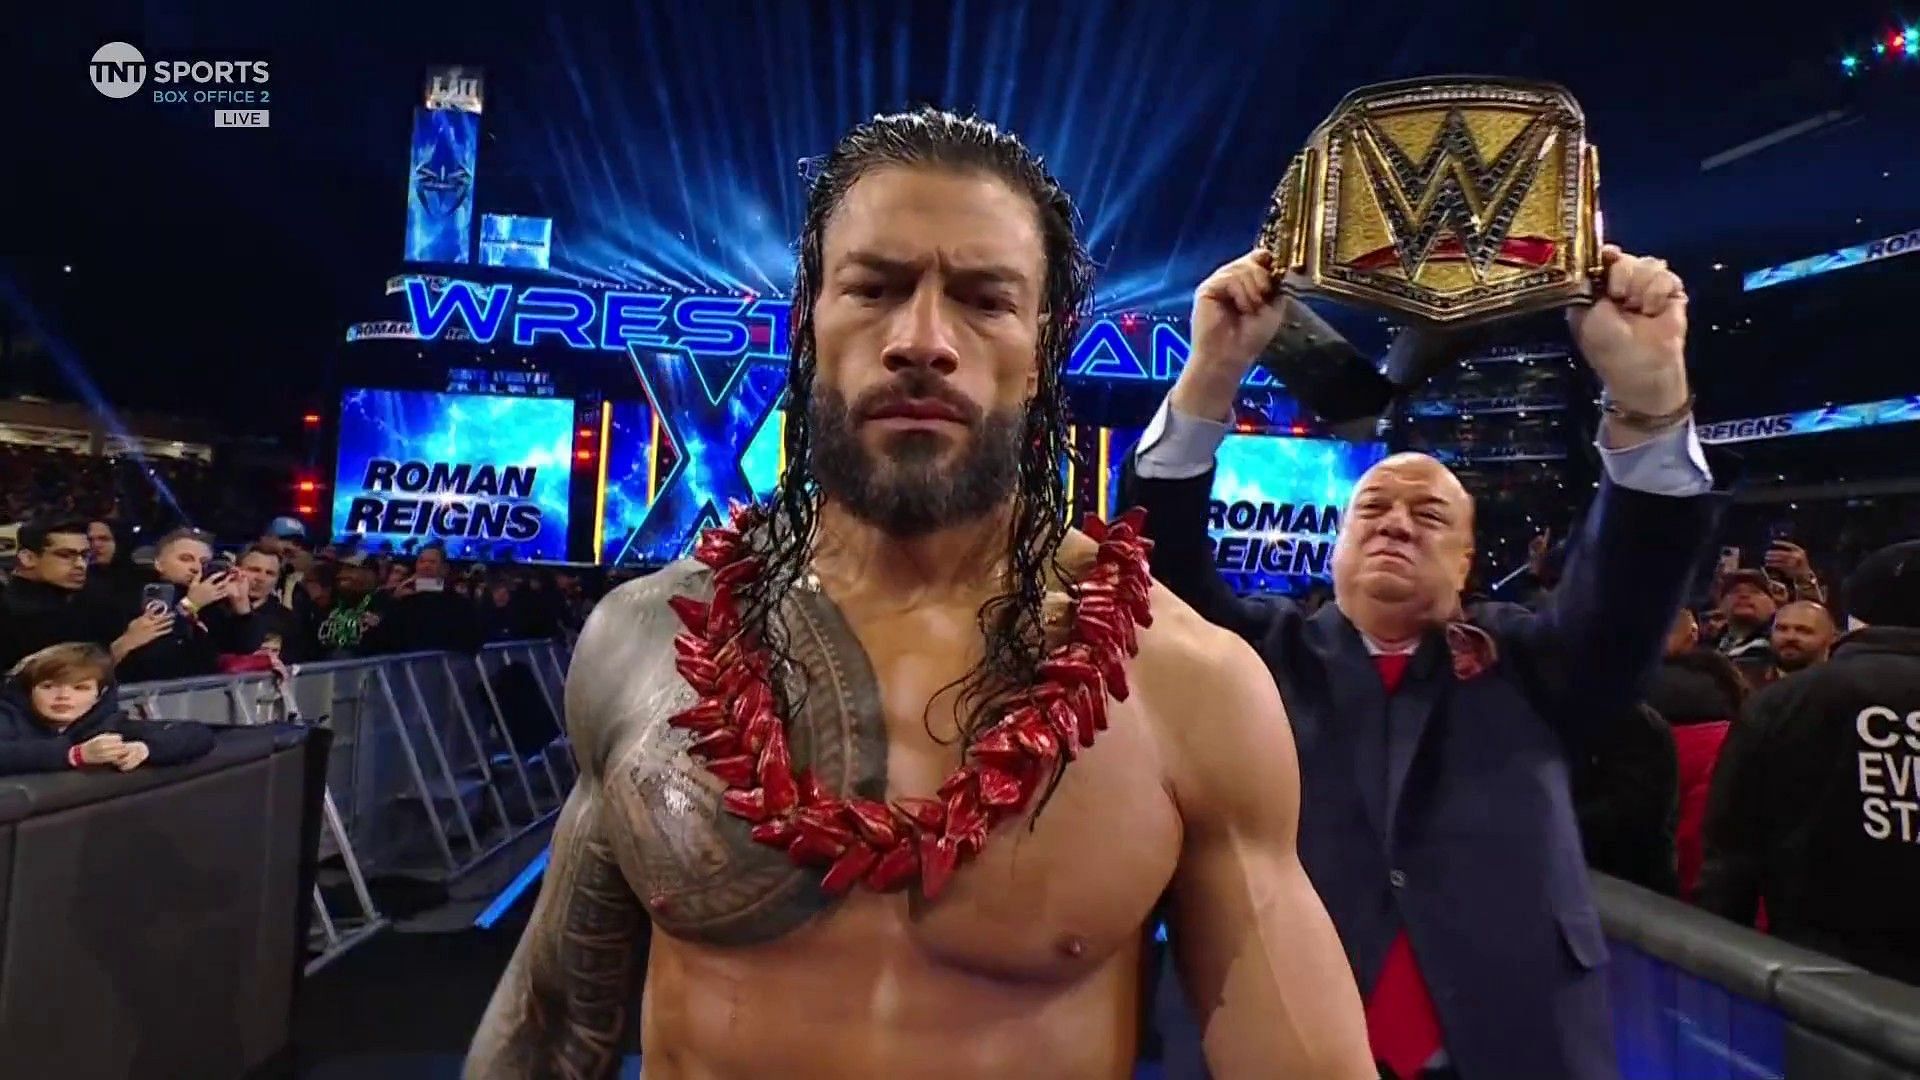 Roman Reigns making his way to WrestleMania XL